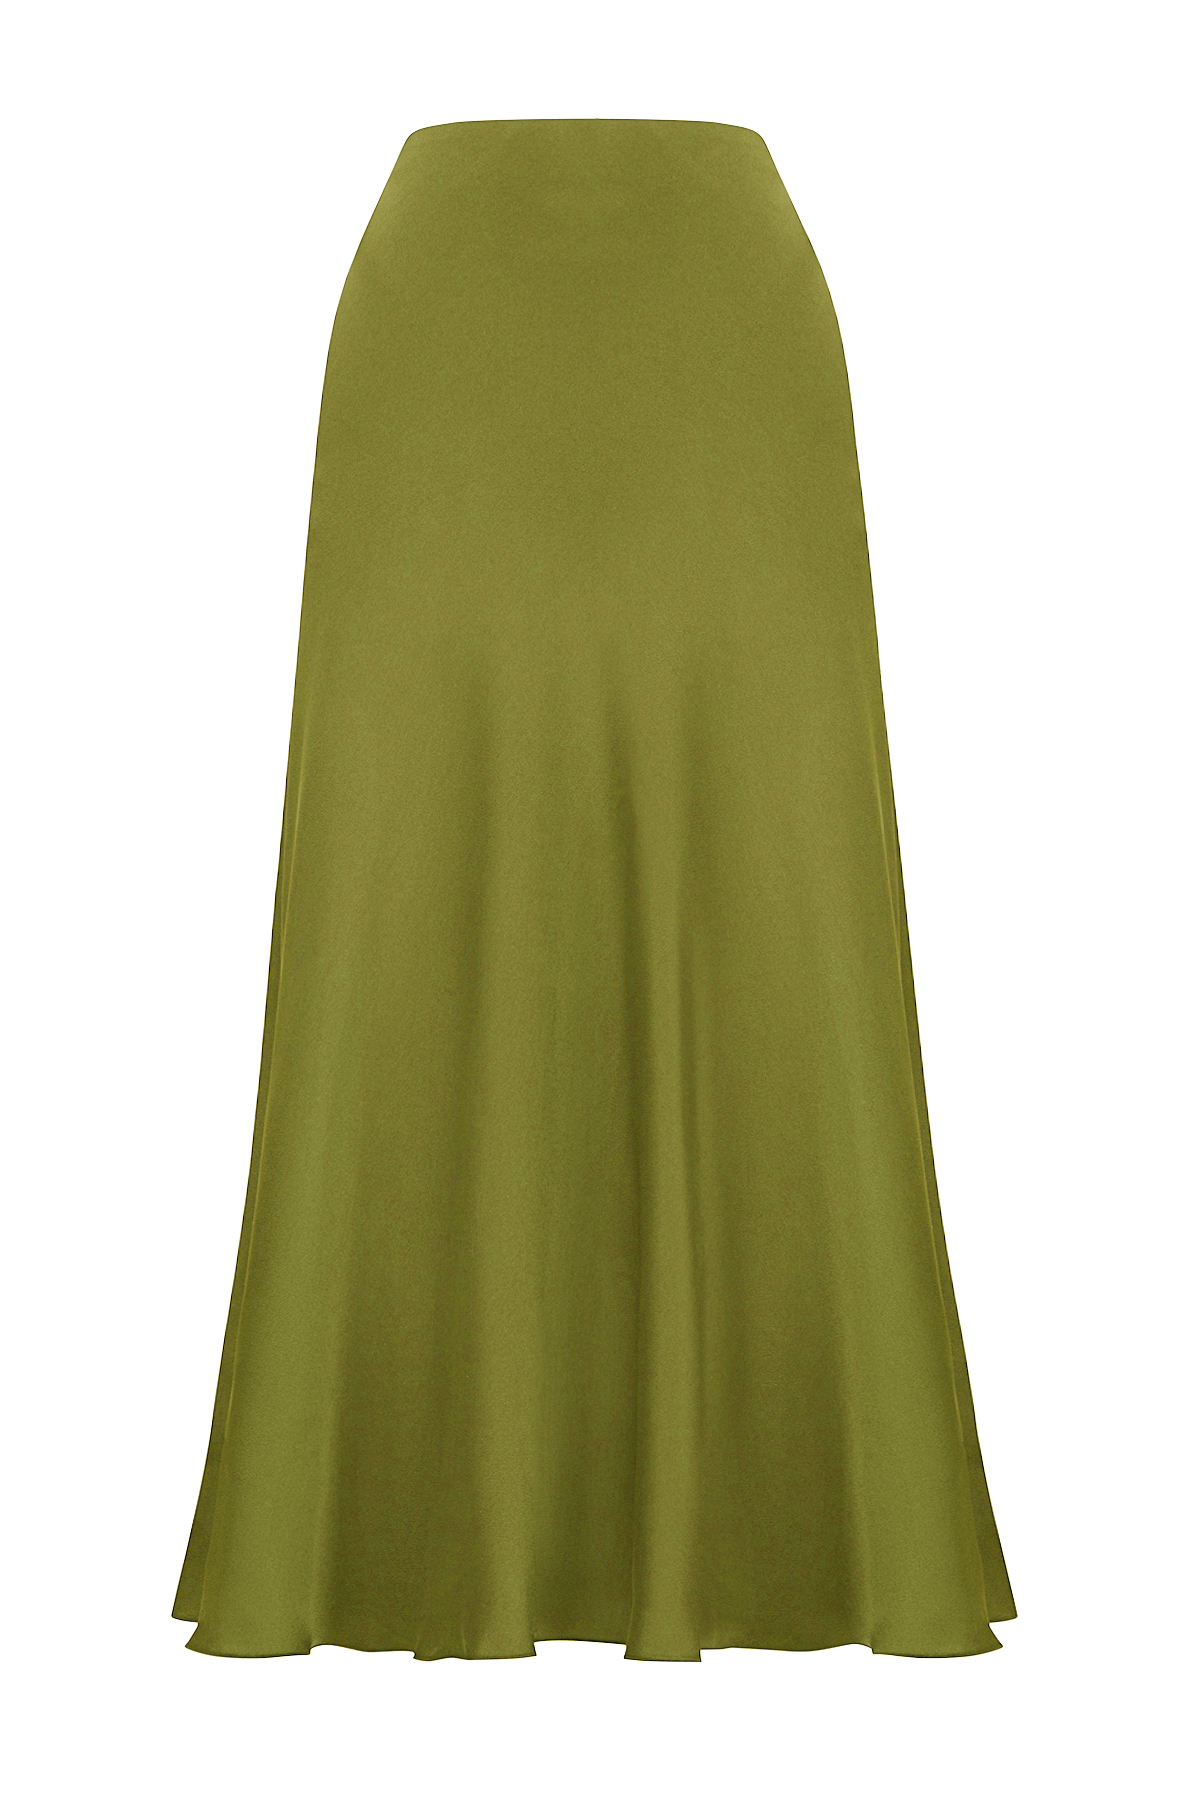 JOSSELYN Satin Midi Green Skirt